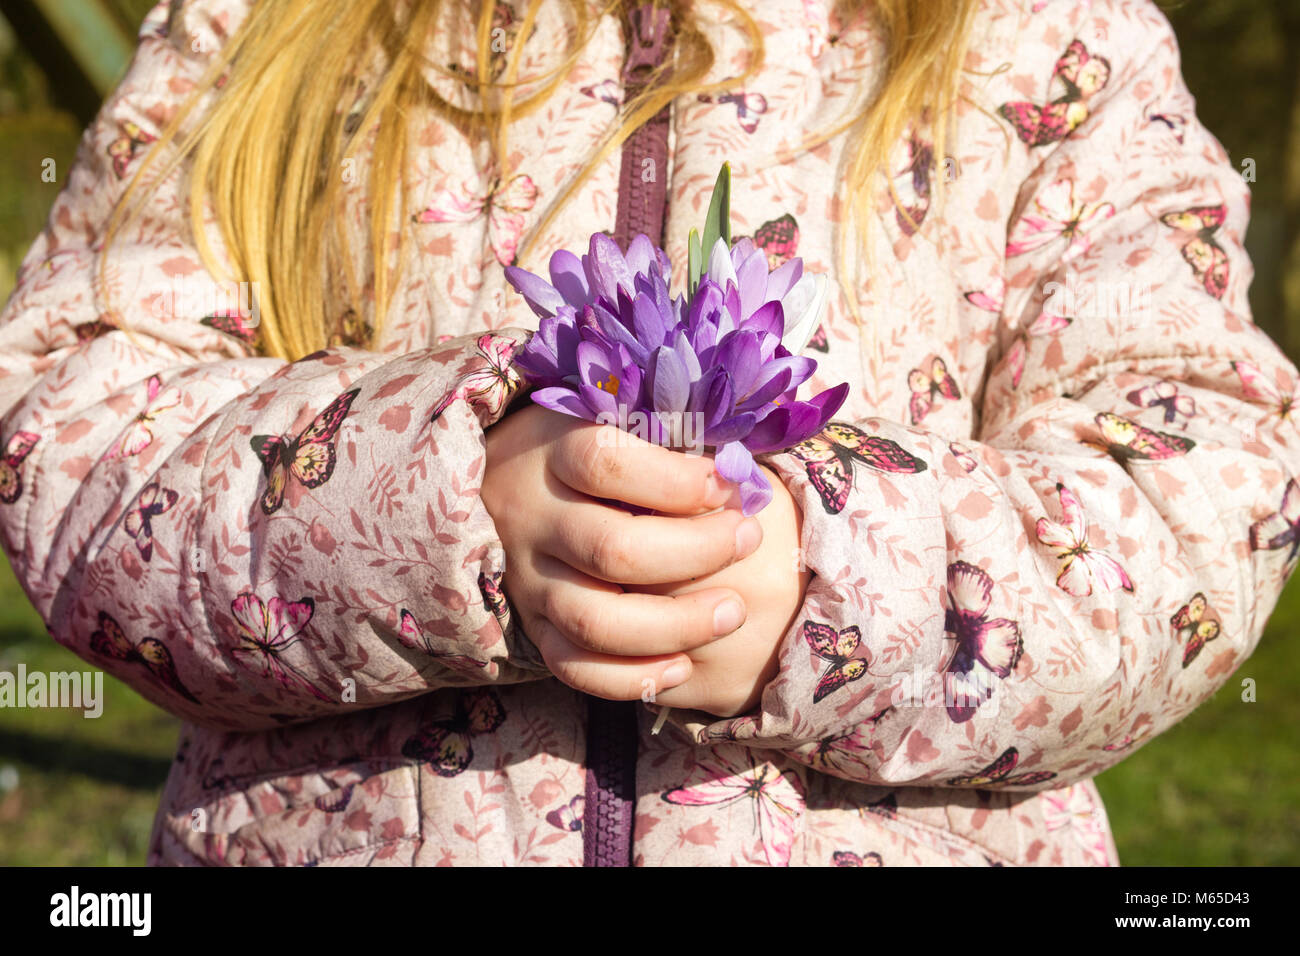 Girl holding a bunch of crocus flowers in garden. Stock Photo